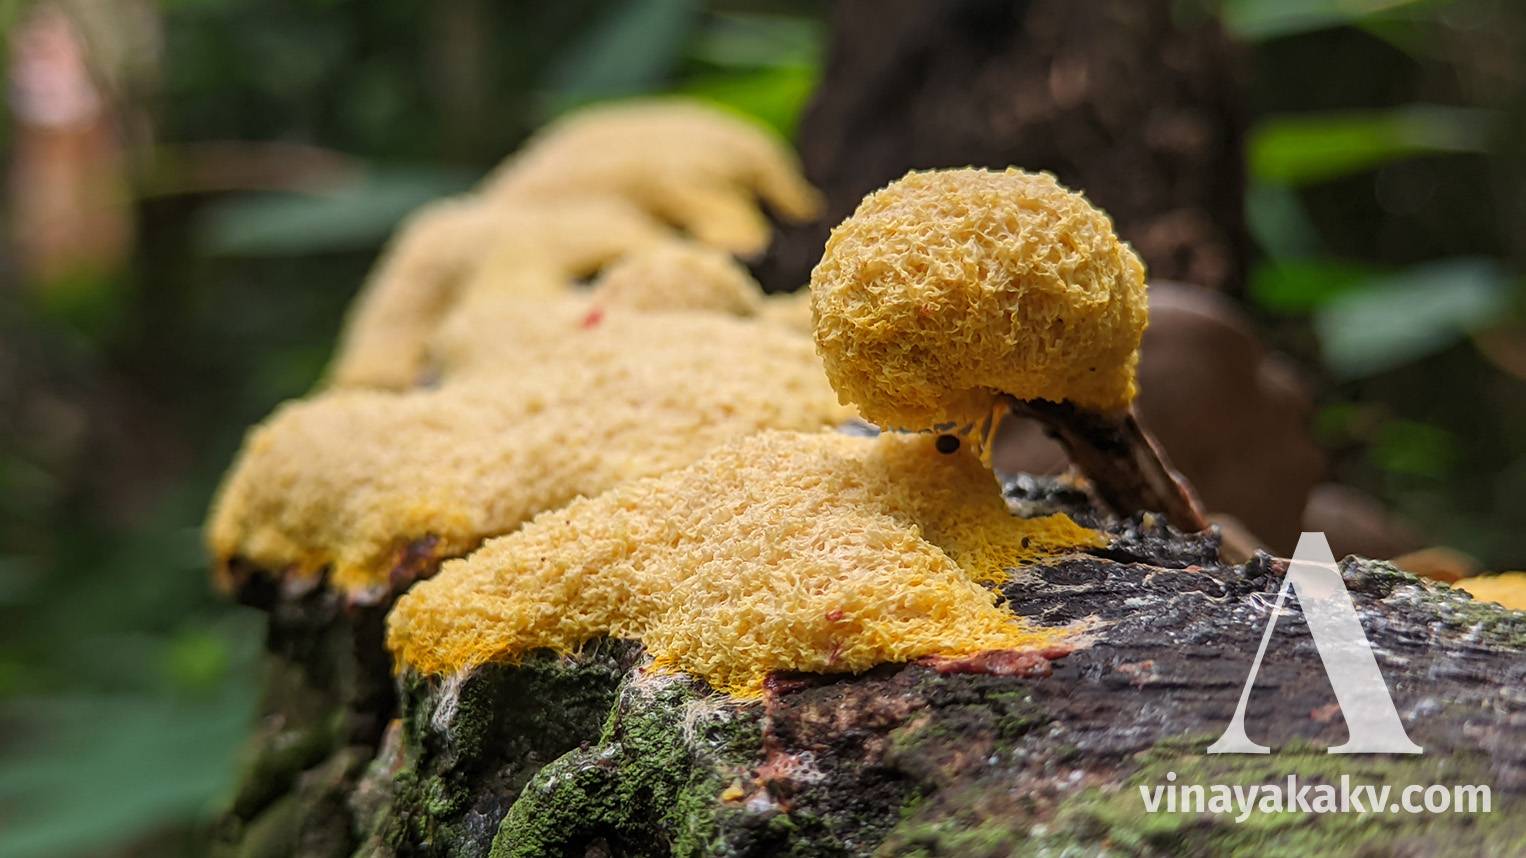 Not fungi -- a yellow mold atop a tree stump